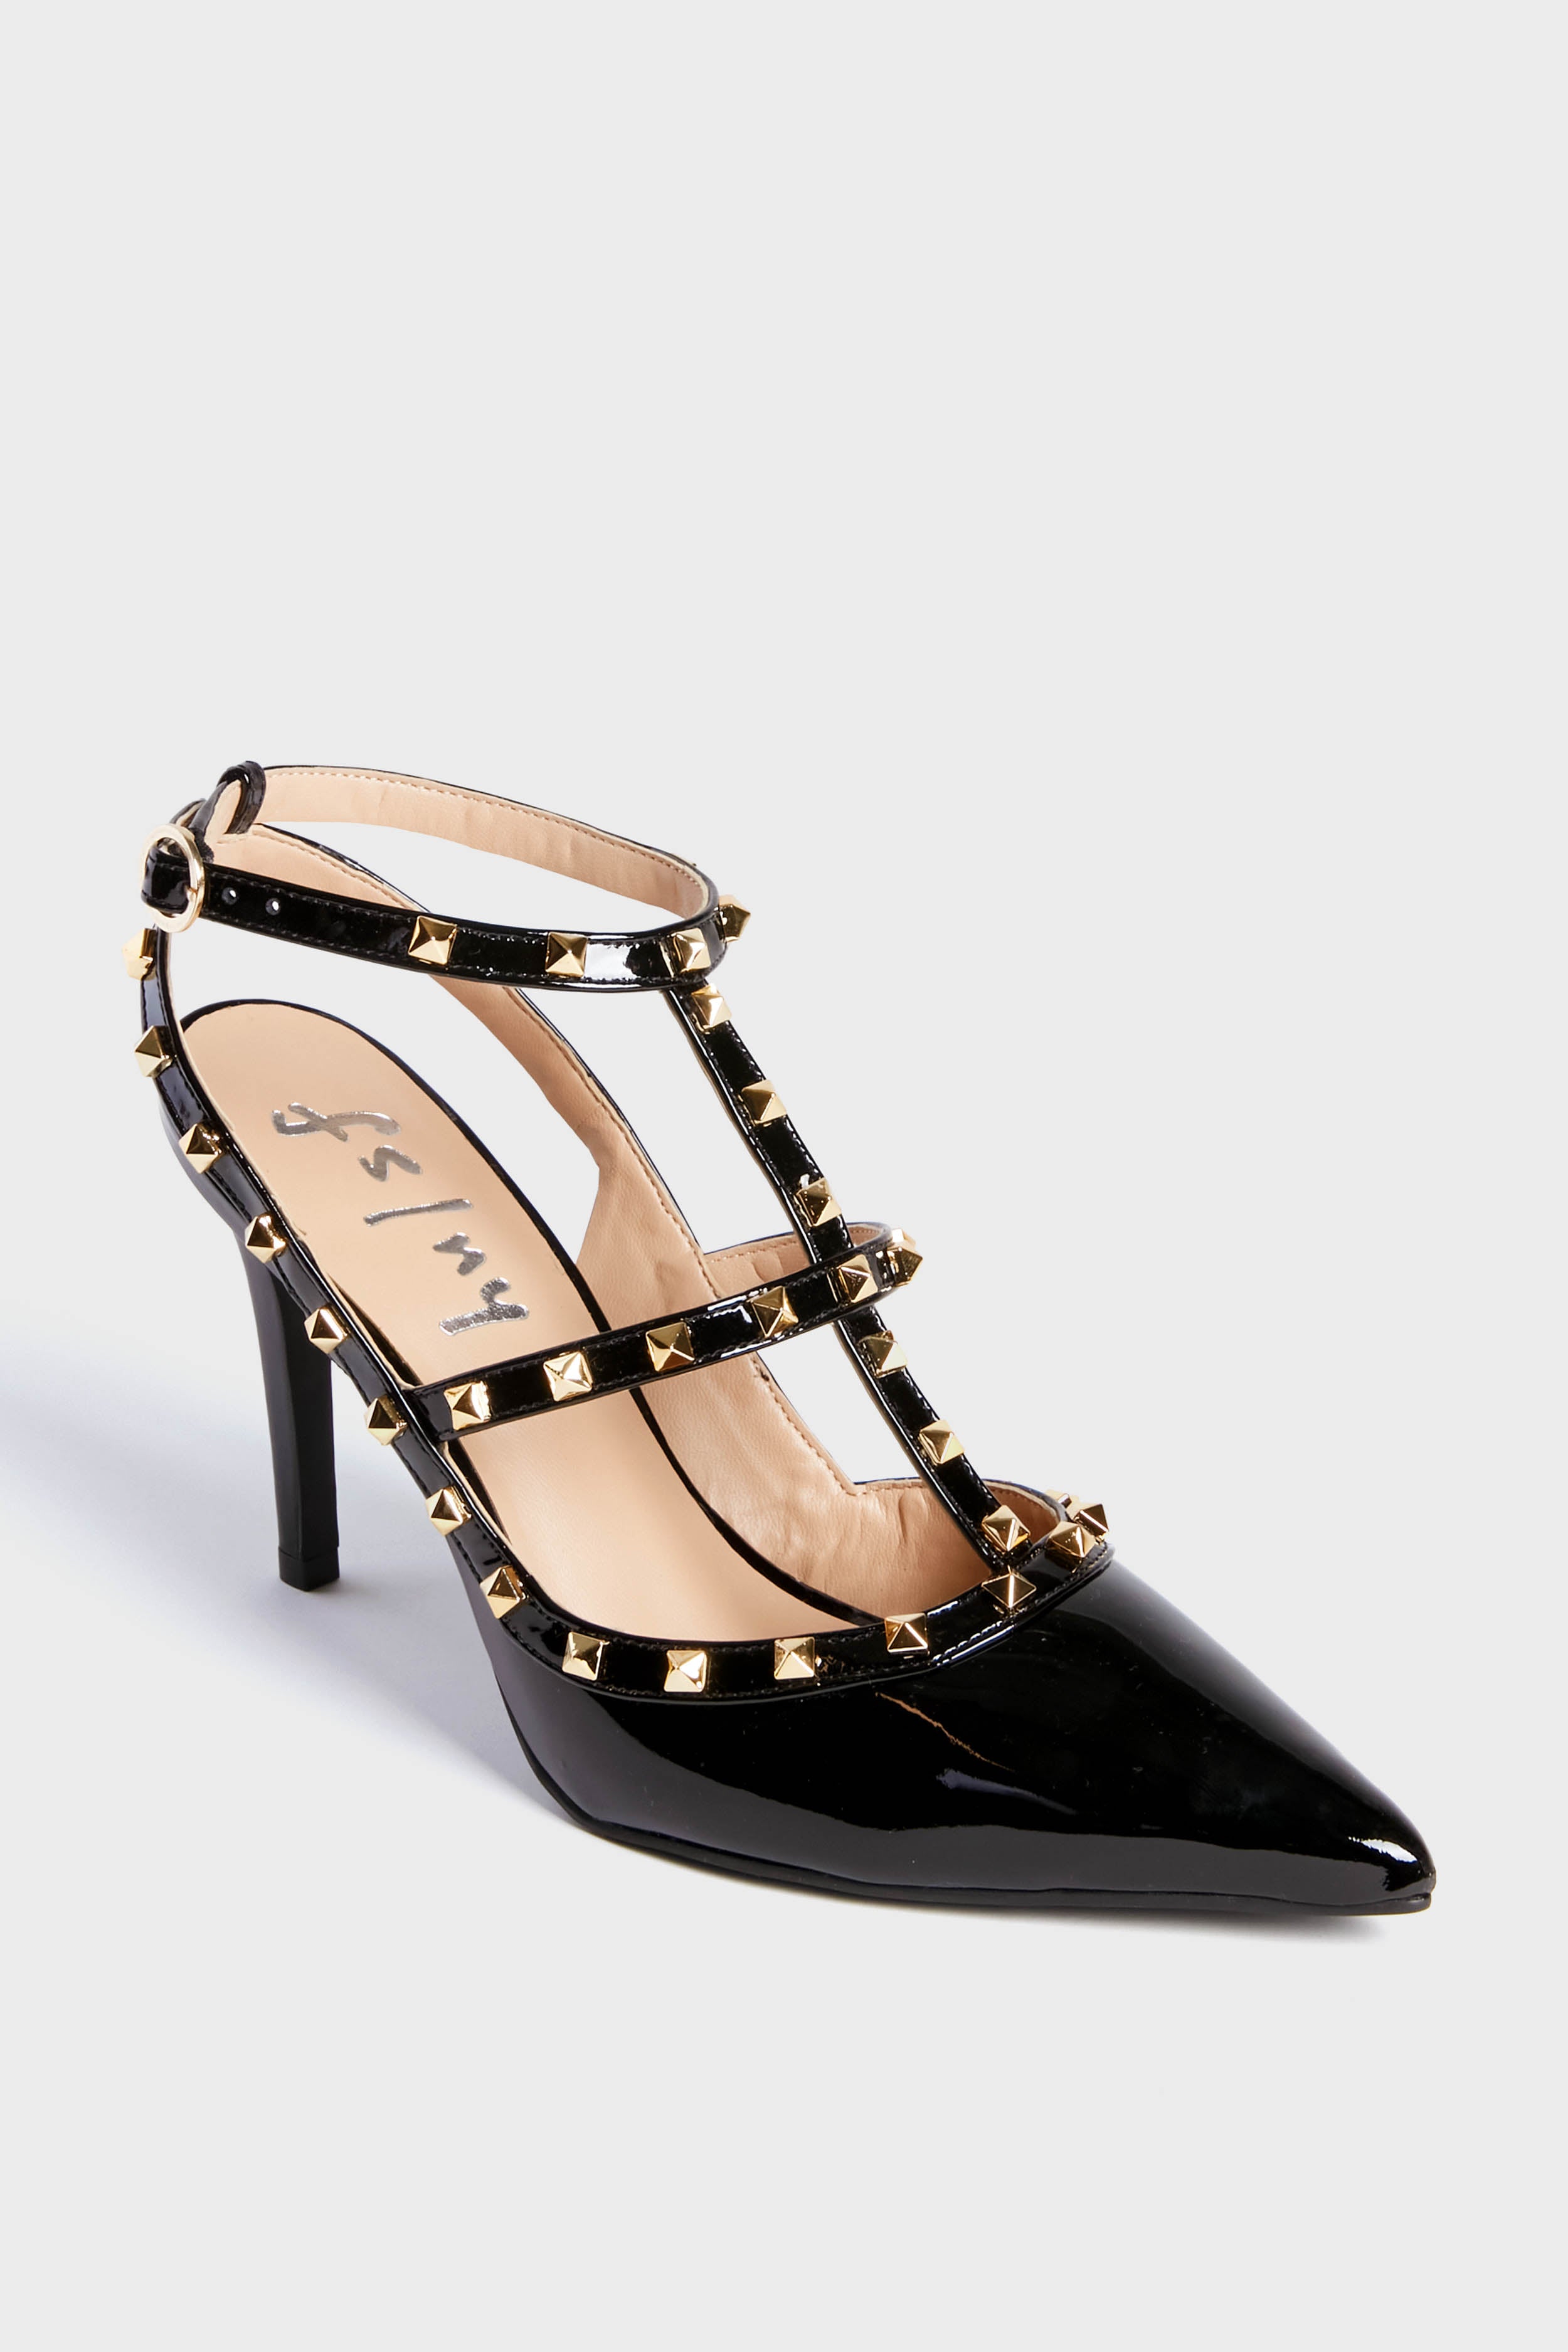 Black East 5th Avenue Heels size 8 classic black high heels | Black high  heels, Shoes women heels, Classic black